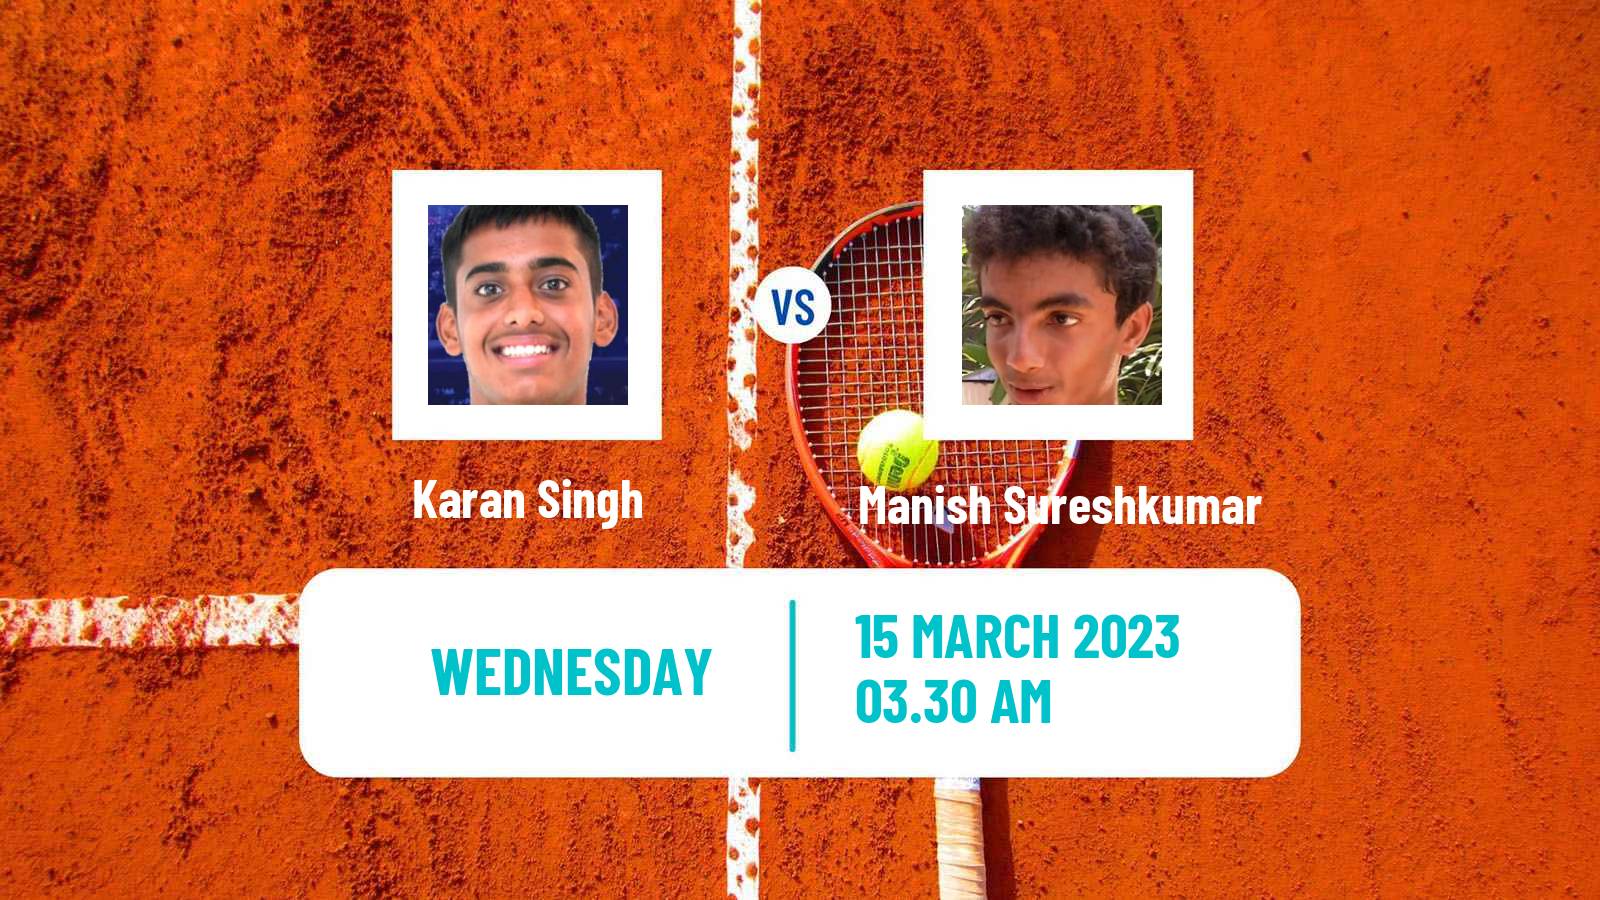 Tennis ITF Tournaments Karan Singh - Manish Sureshkumar